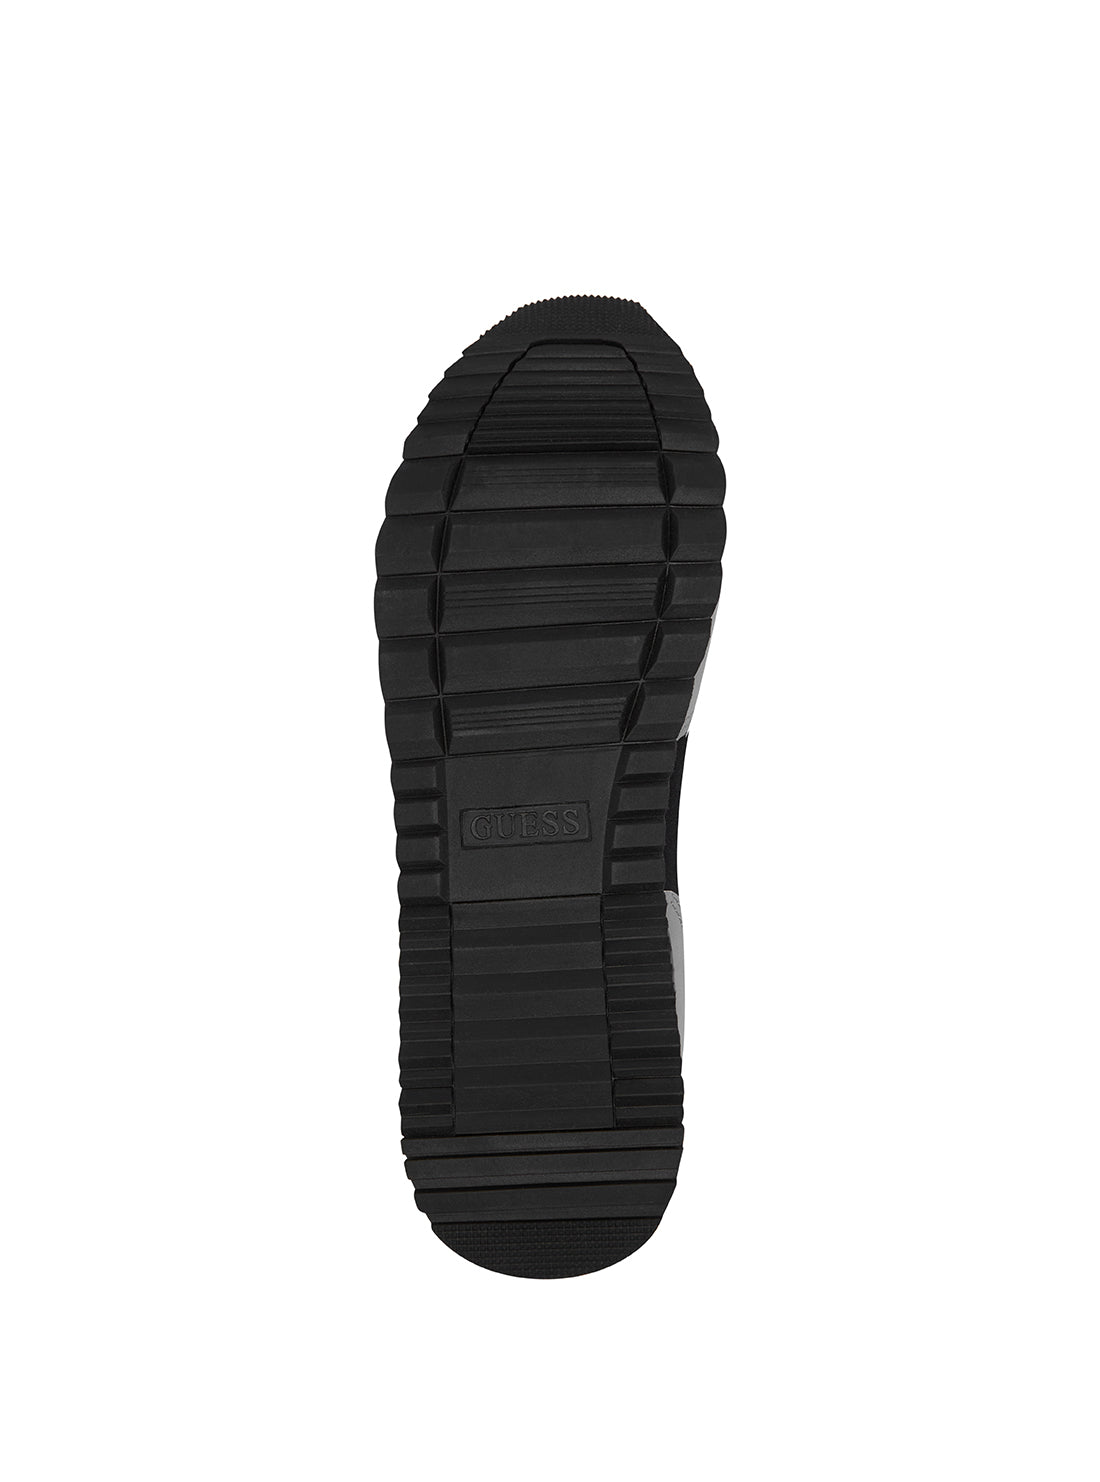 GUESS Men's Black Grey Adder Logo Low Top Sneakers ADDER Bottom View